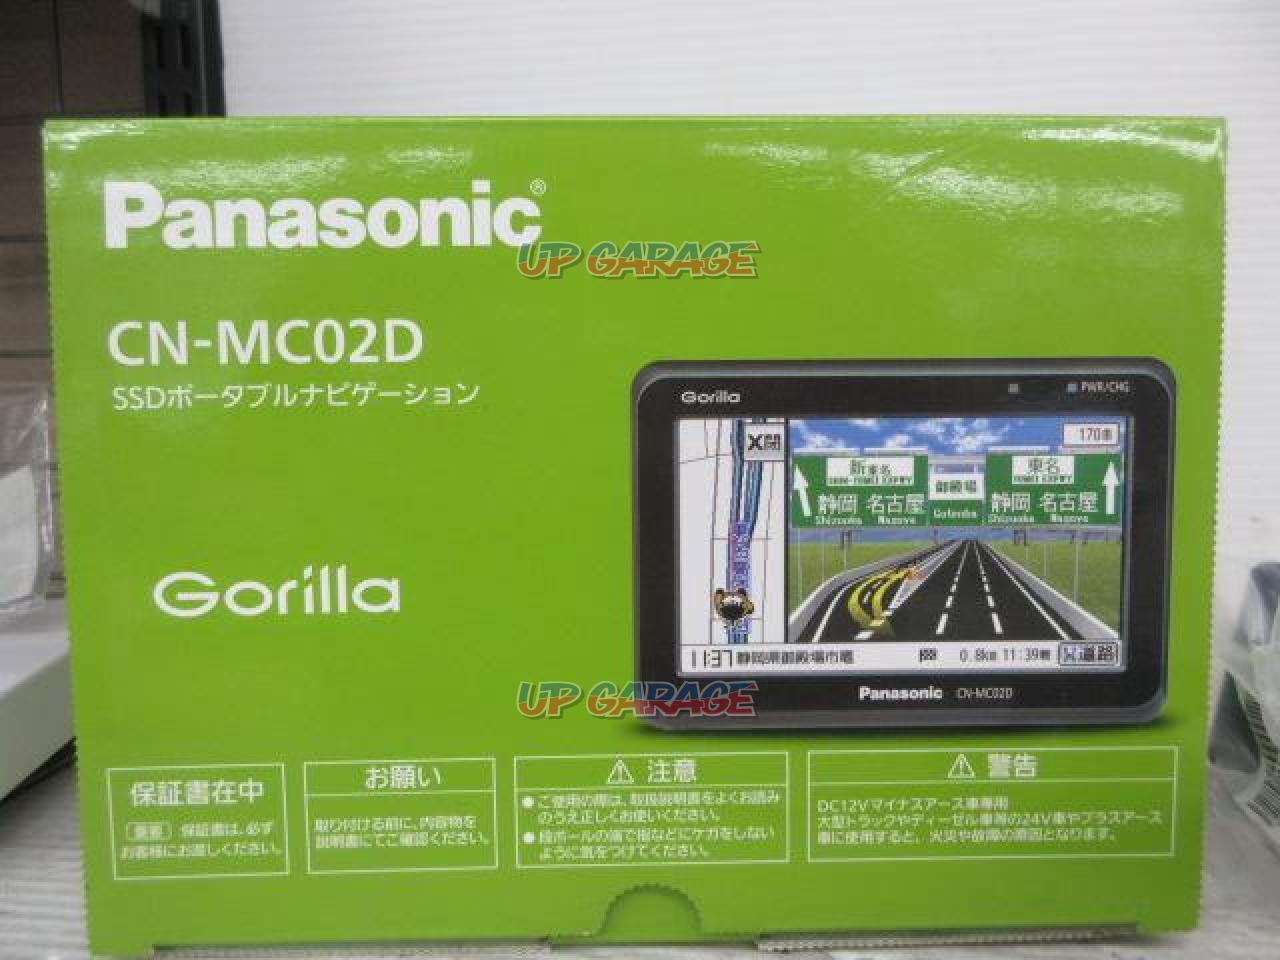 Panasonic/CN-MC02D